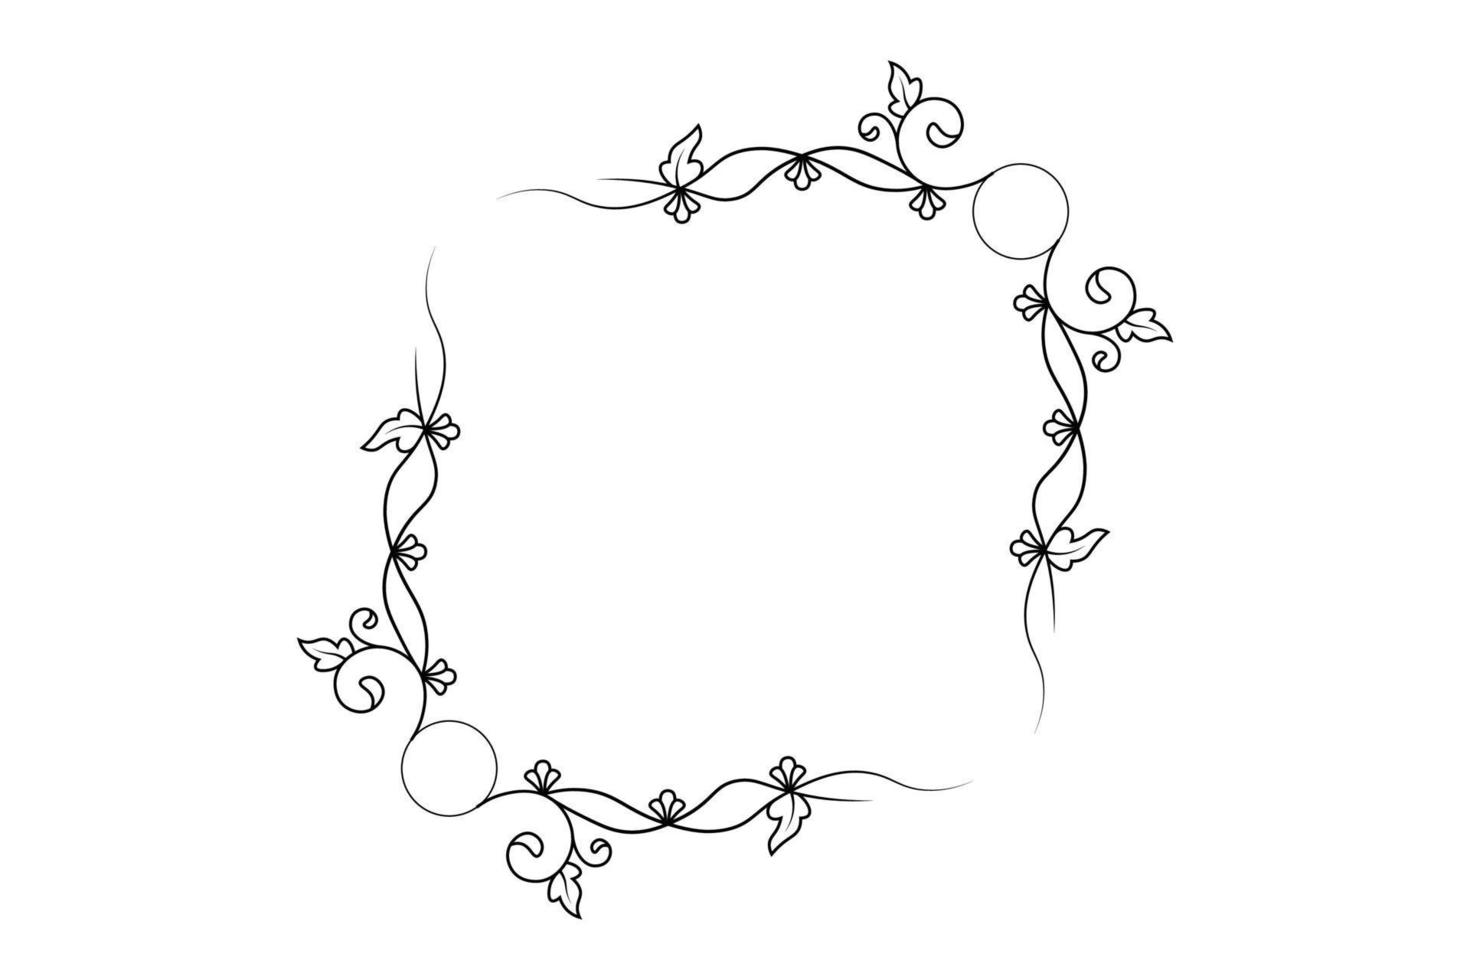 vecteur de cadre de fleur, cadre de dessin à la main floral, vecteur libre